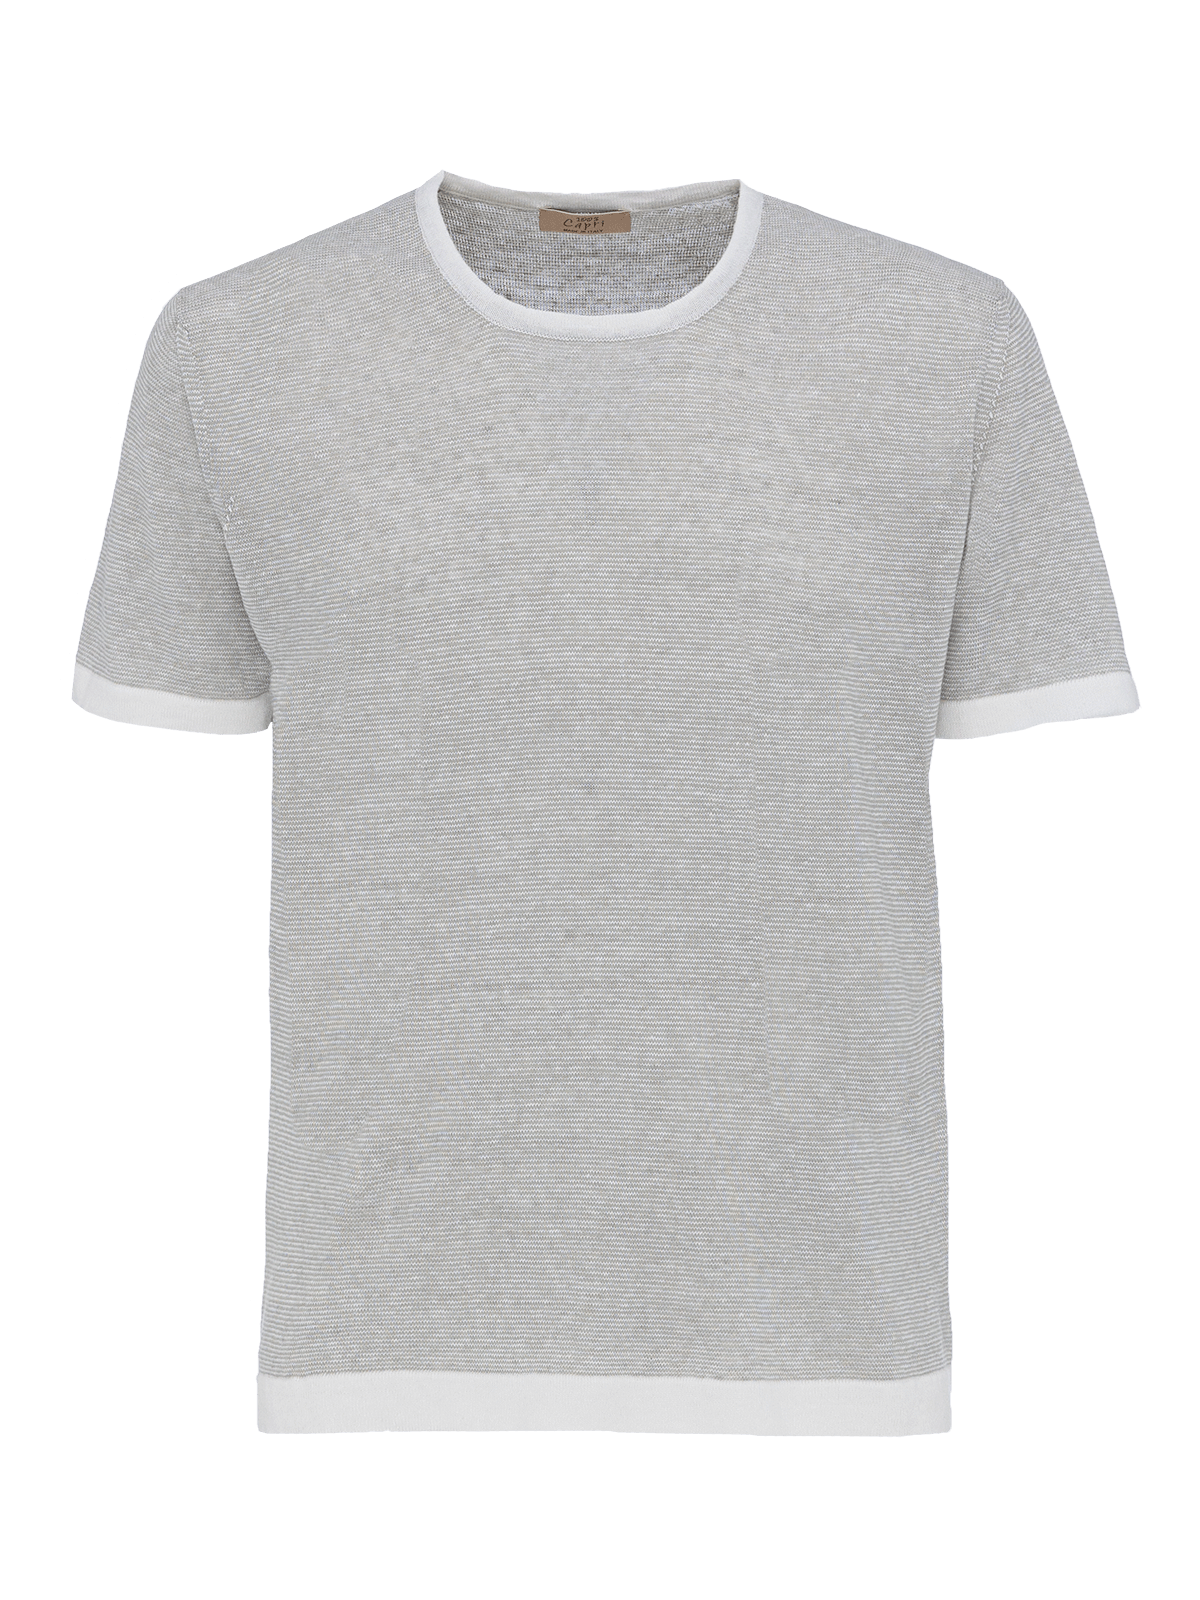 St. Barth linen T-Shirt for man 100% Capri light grey and white linen t-shirt front